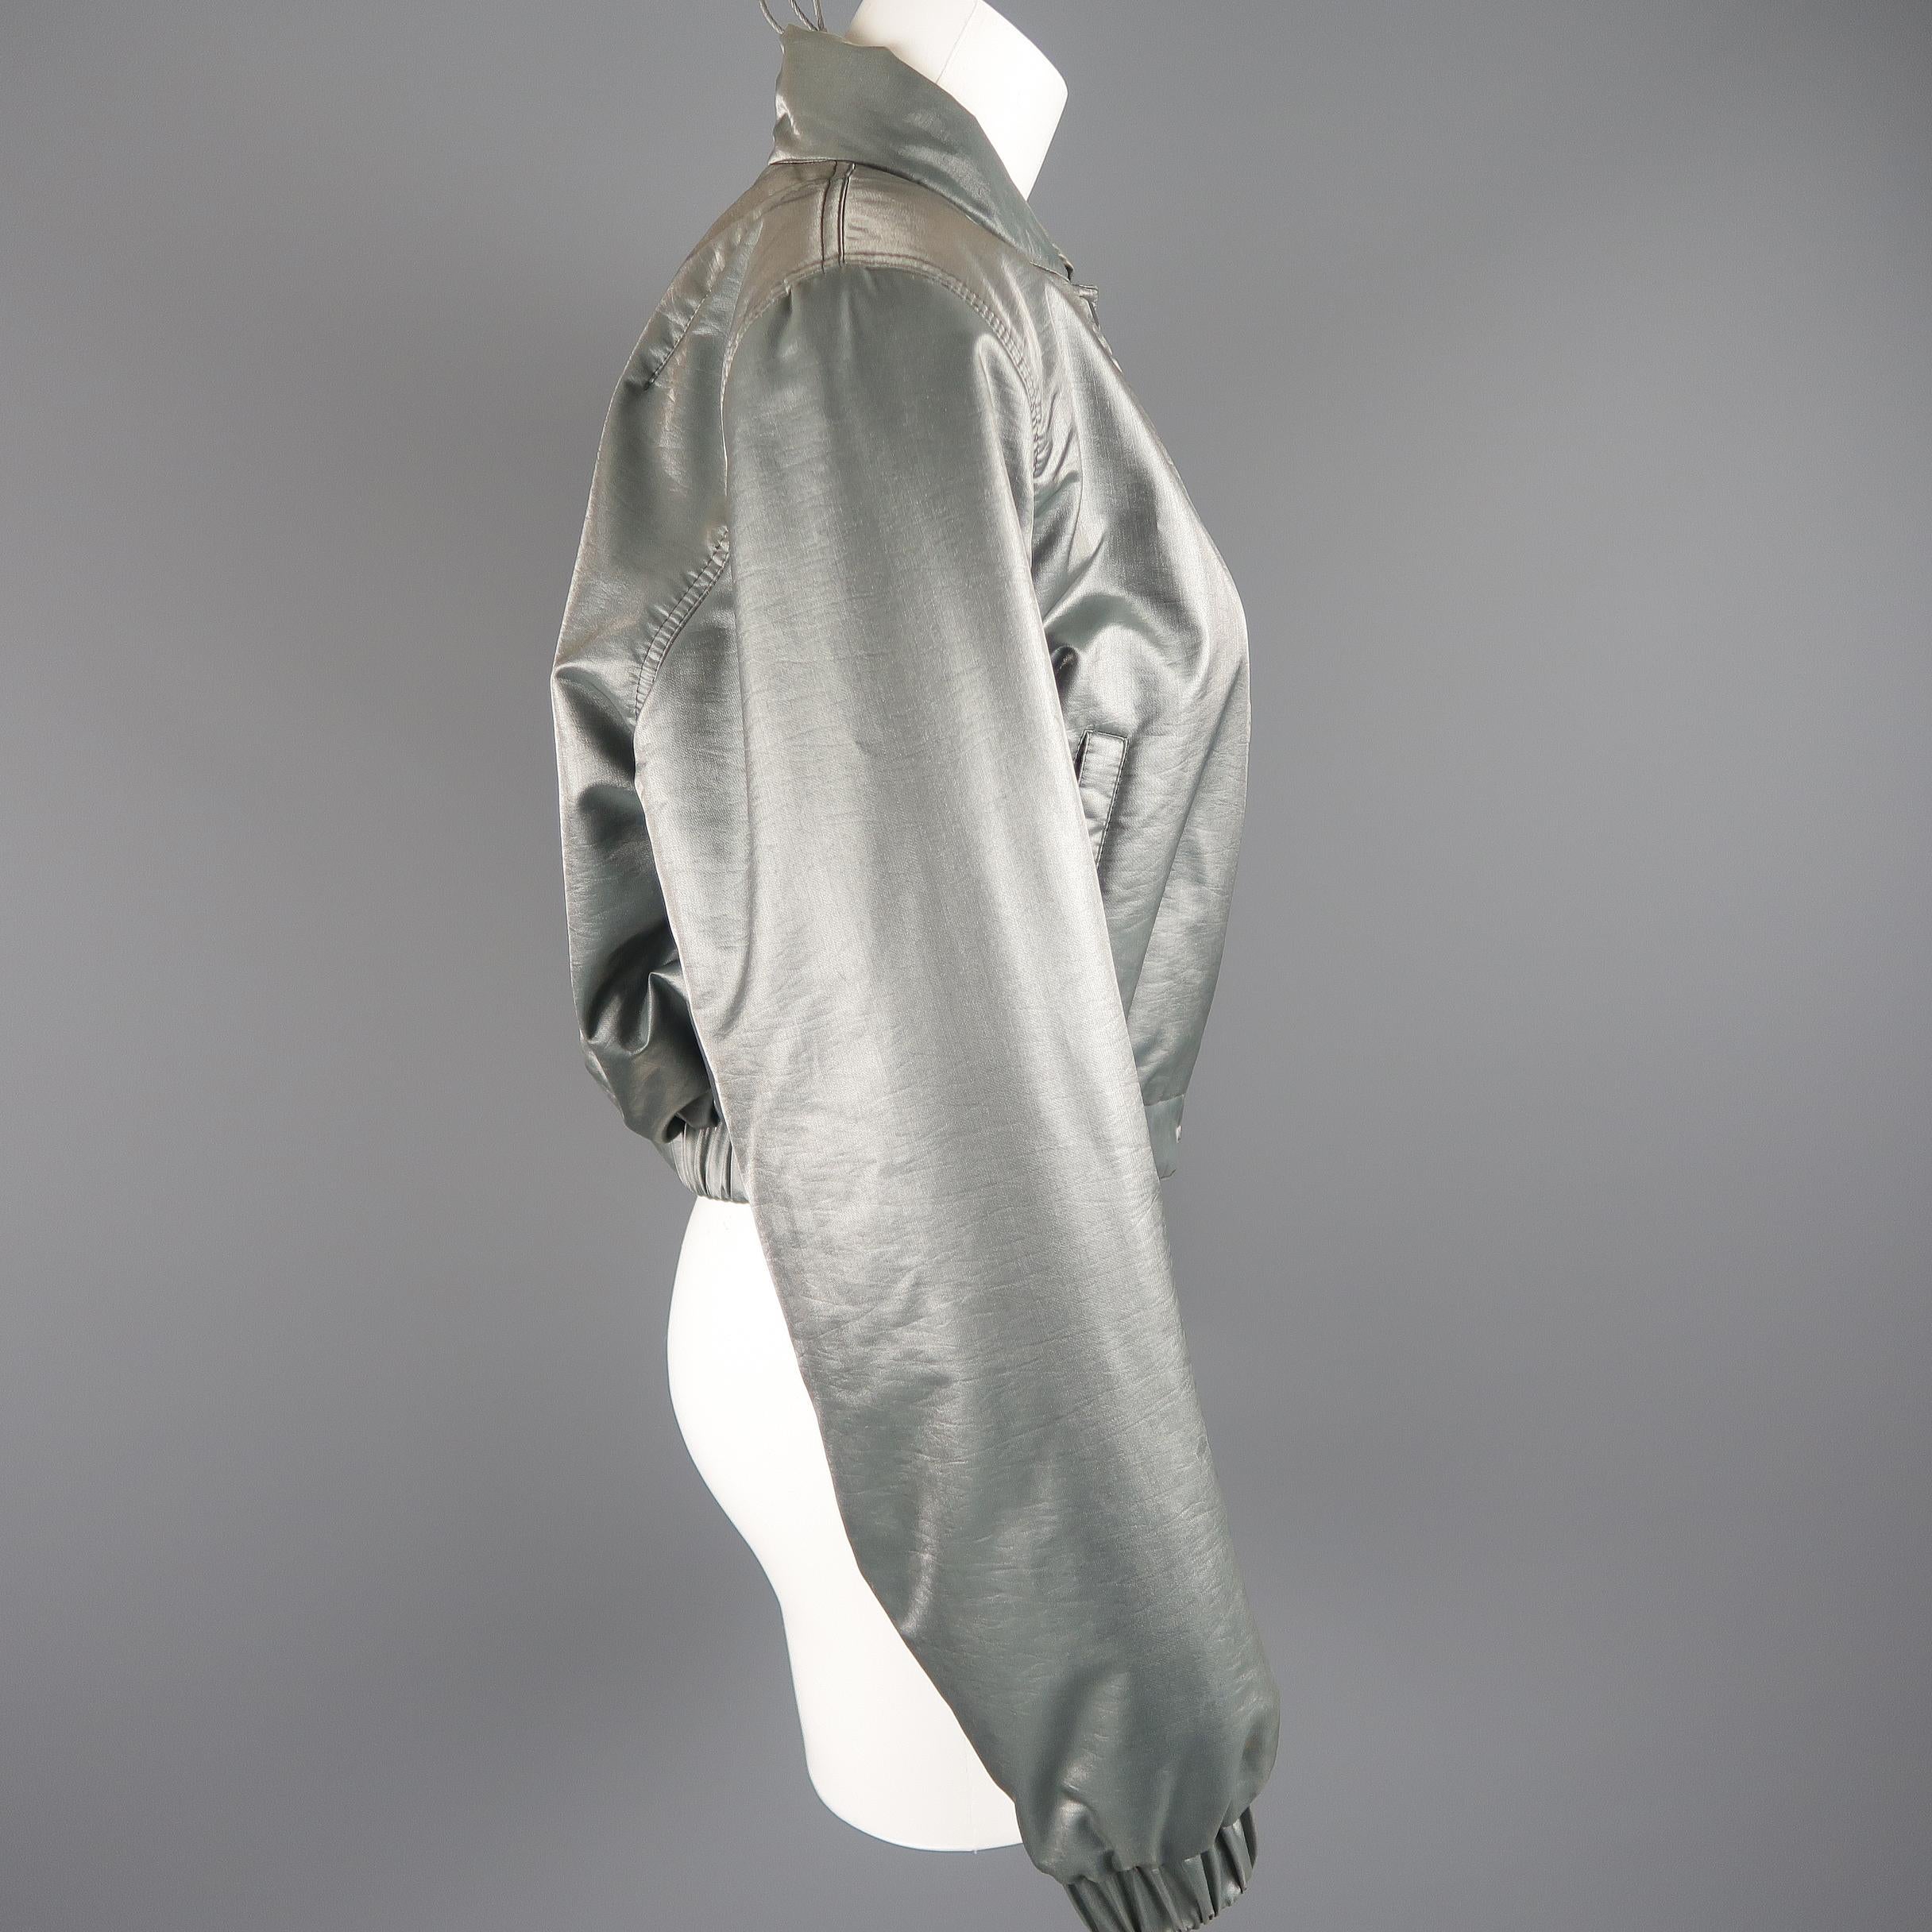 Women's CLAUDE MONTANA Size 6 Metallic Teal Grey Taffeta Cropped Bomber Jacket